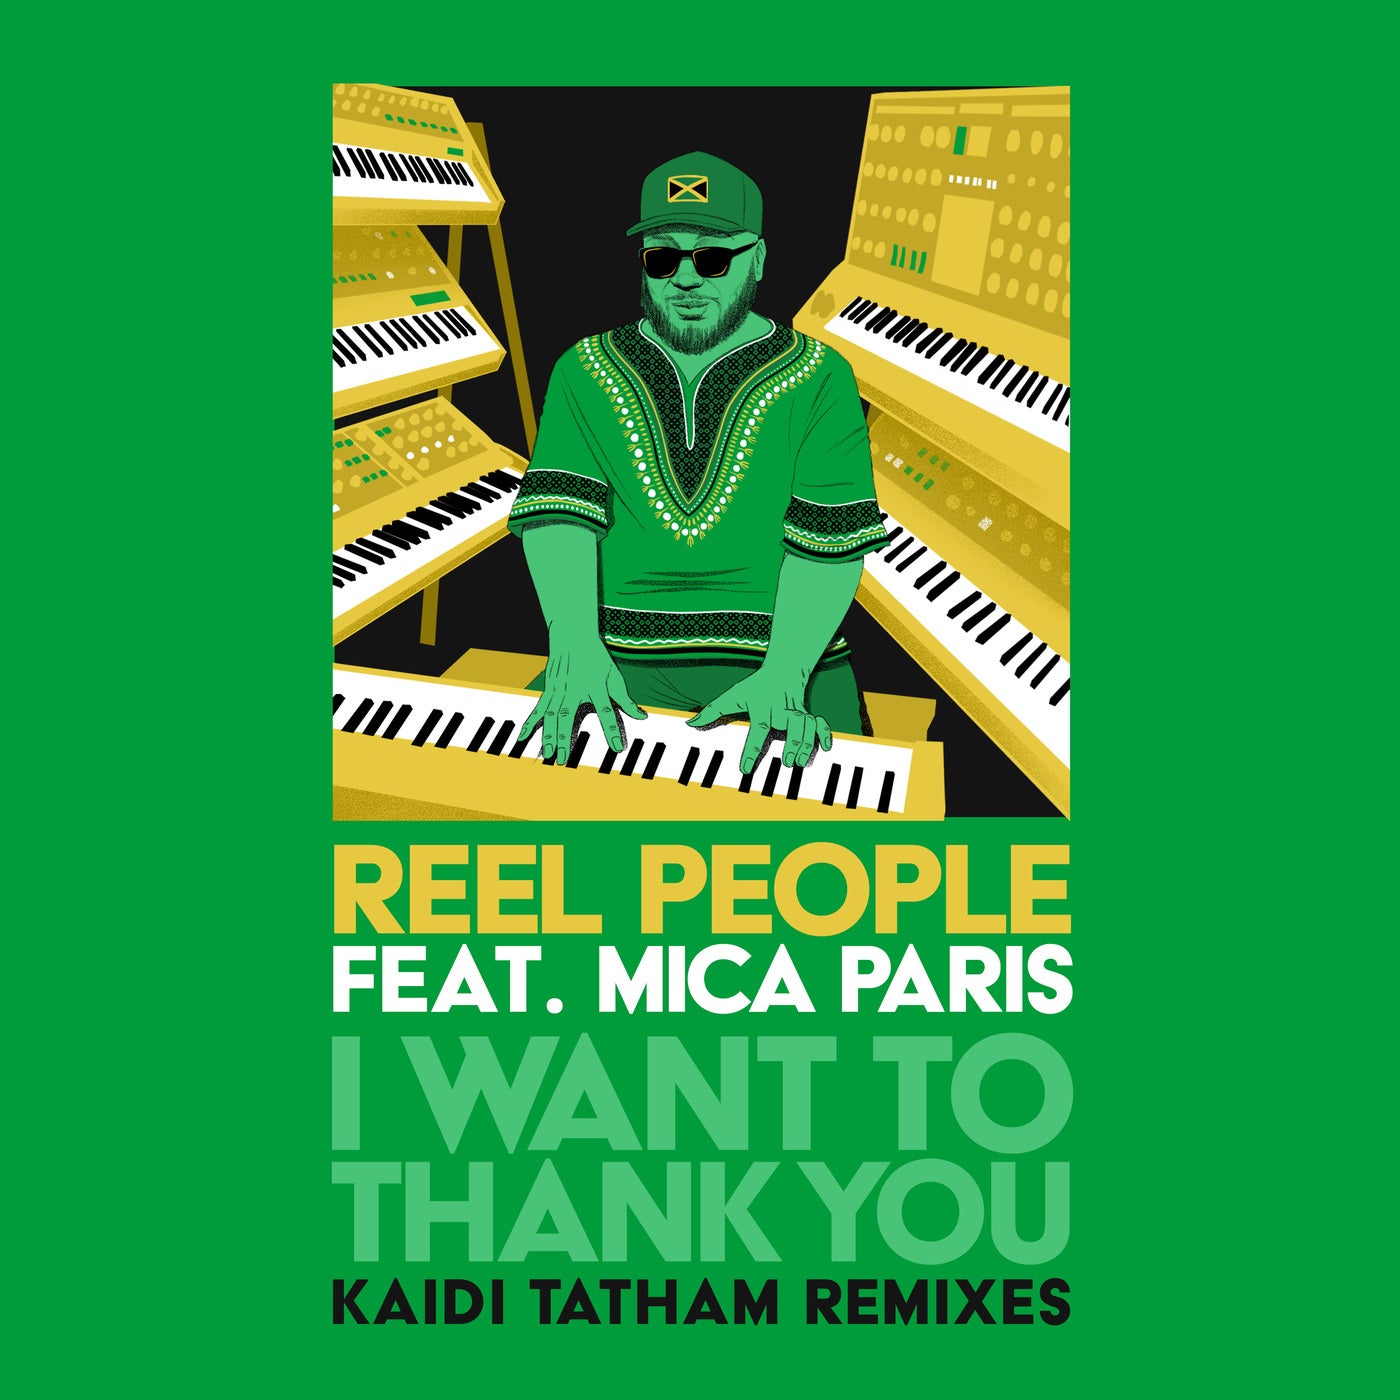 I Want To Thank You - Kaidi Tatham Remixes